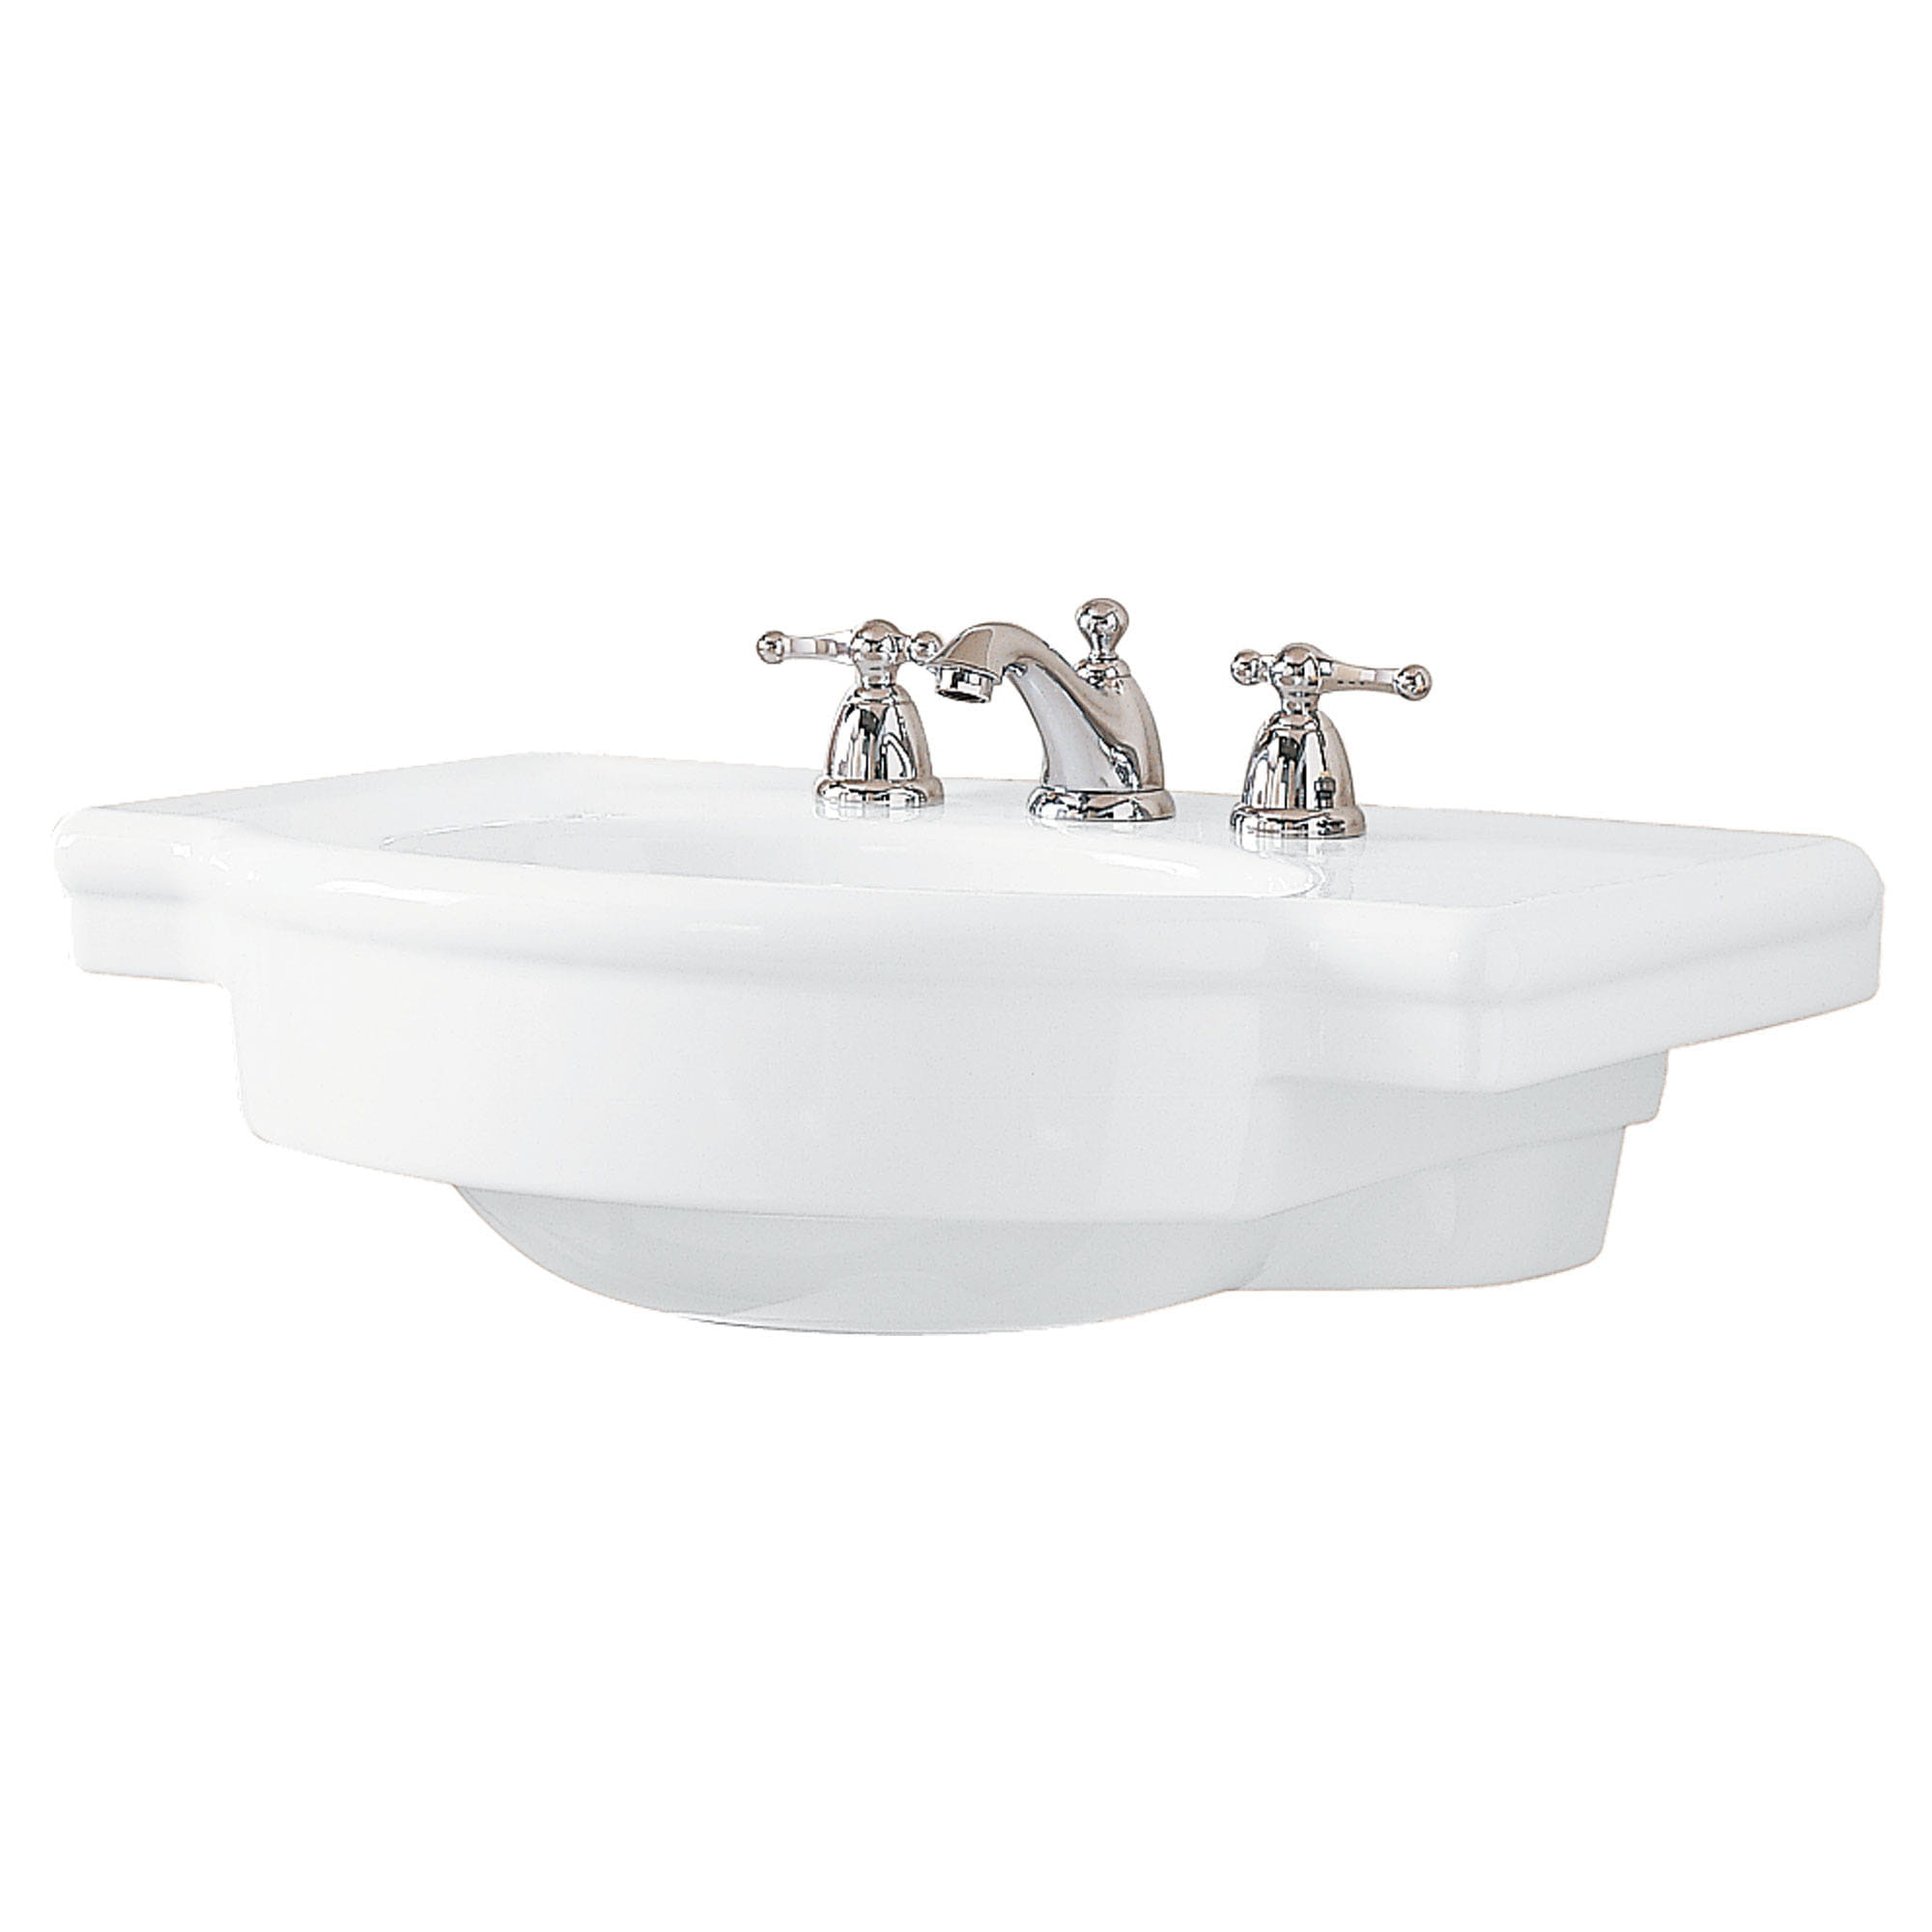 Retrospect 8 Inch Widespread Pedestal Sink Top WHITE